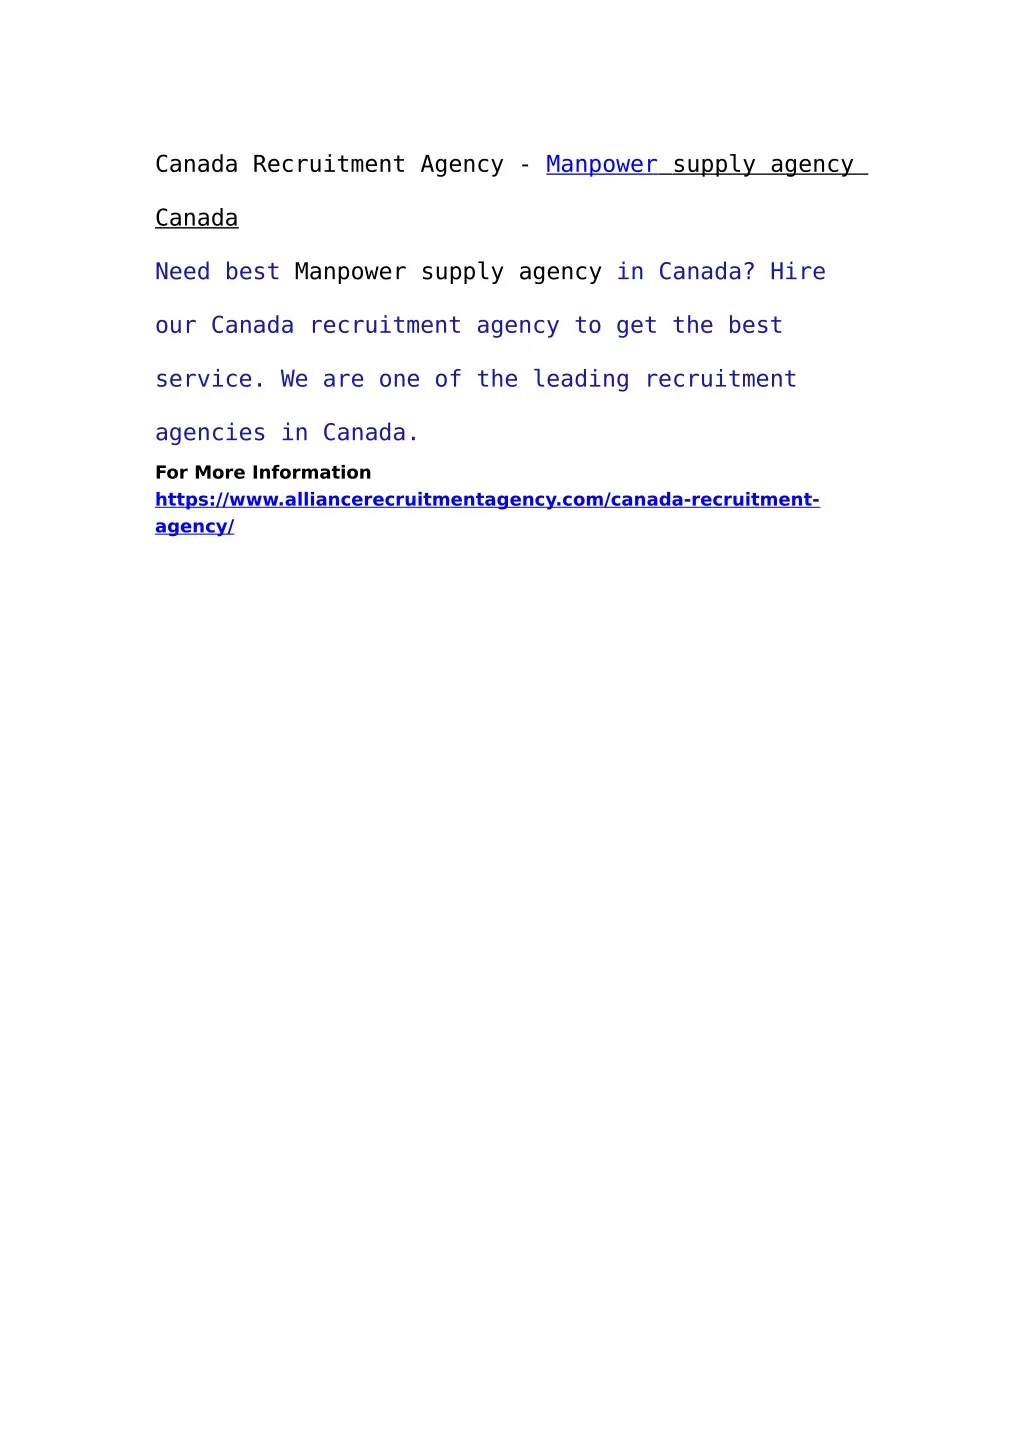 canada recruitment agency manpower